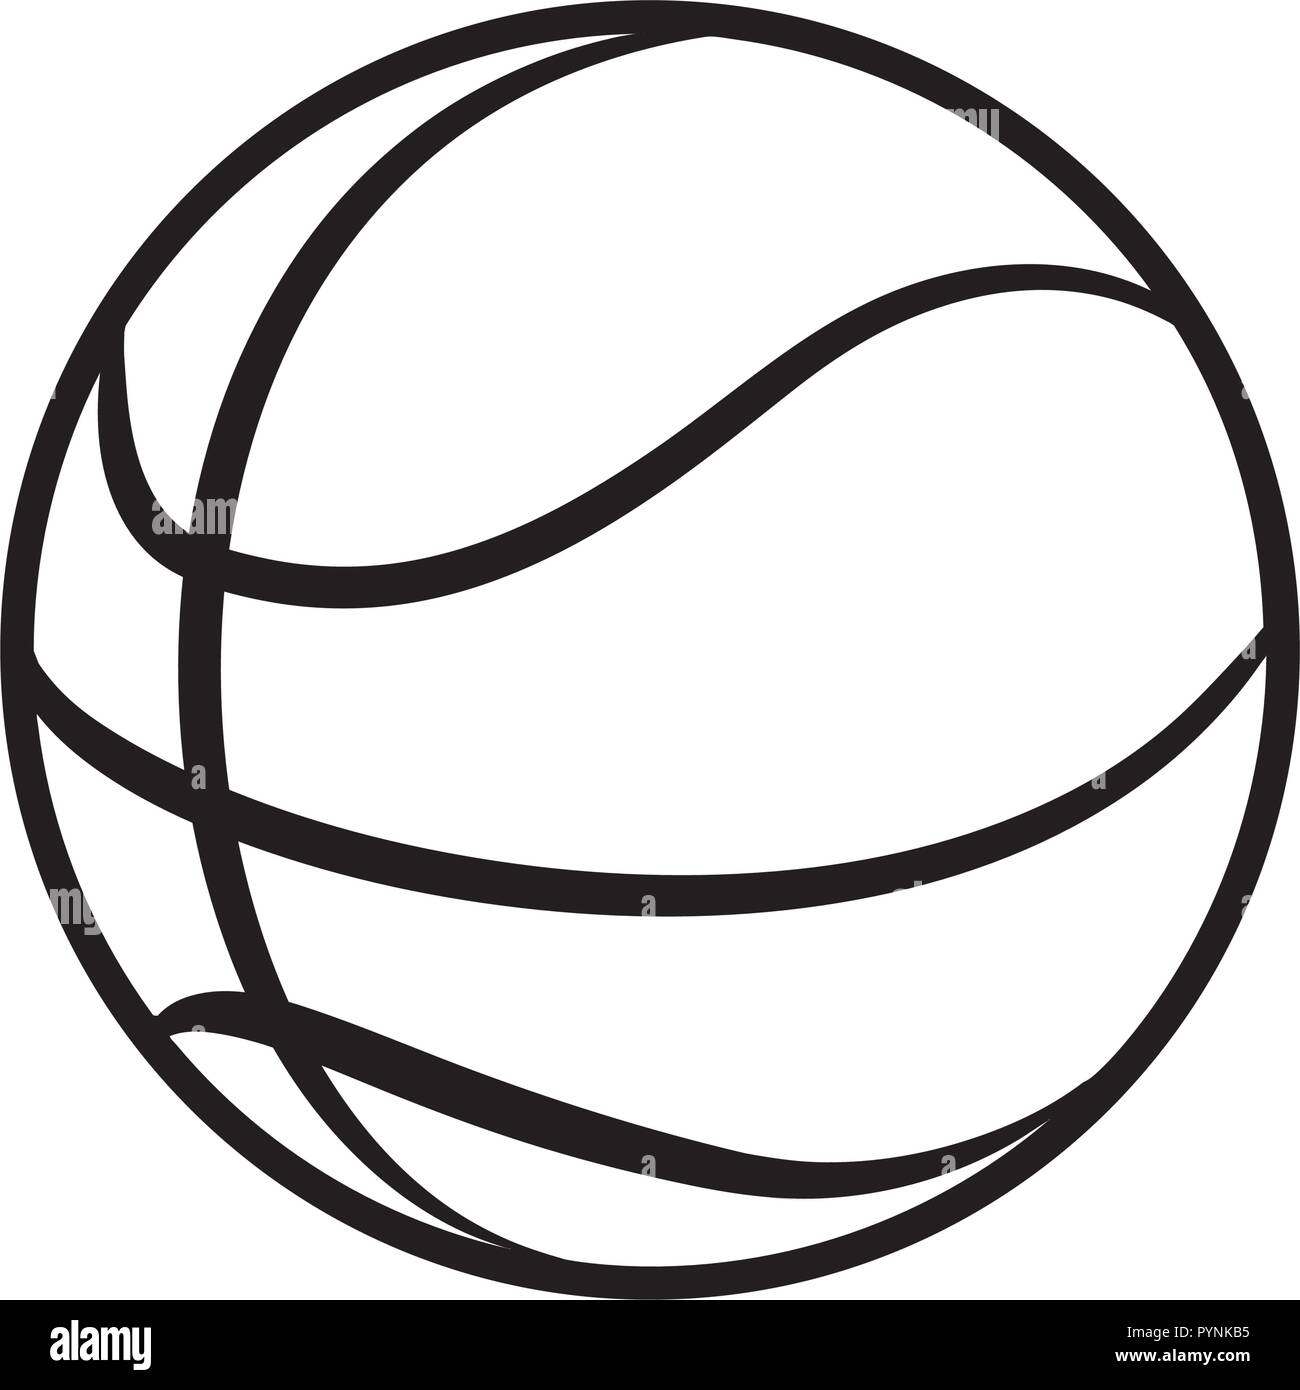 Balon de basquetbol imágenes de stock de arte vectorial